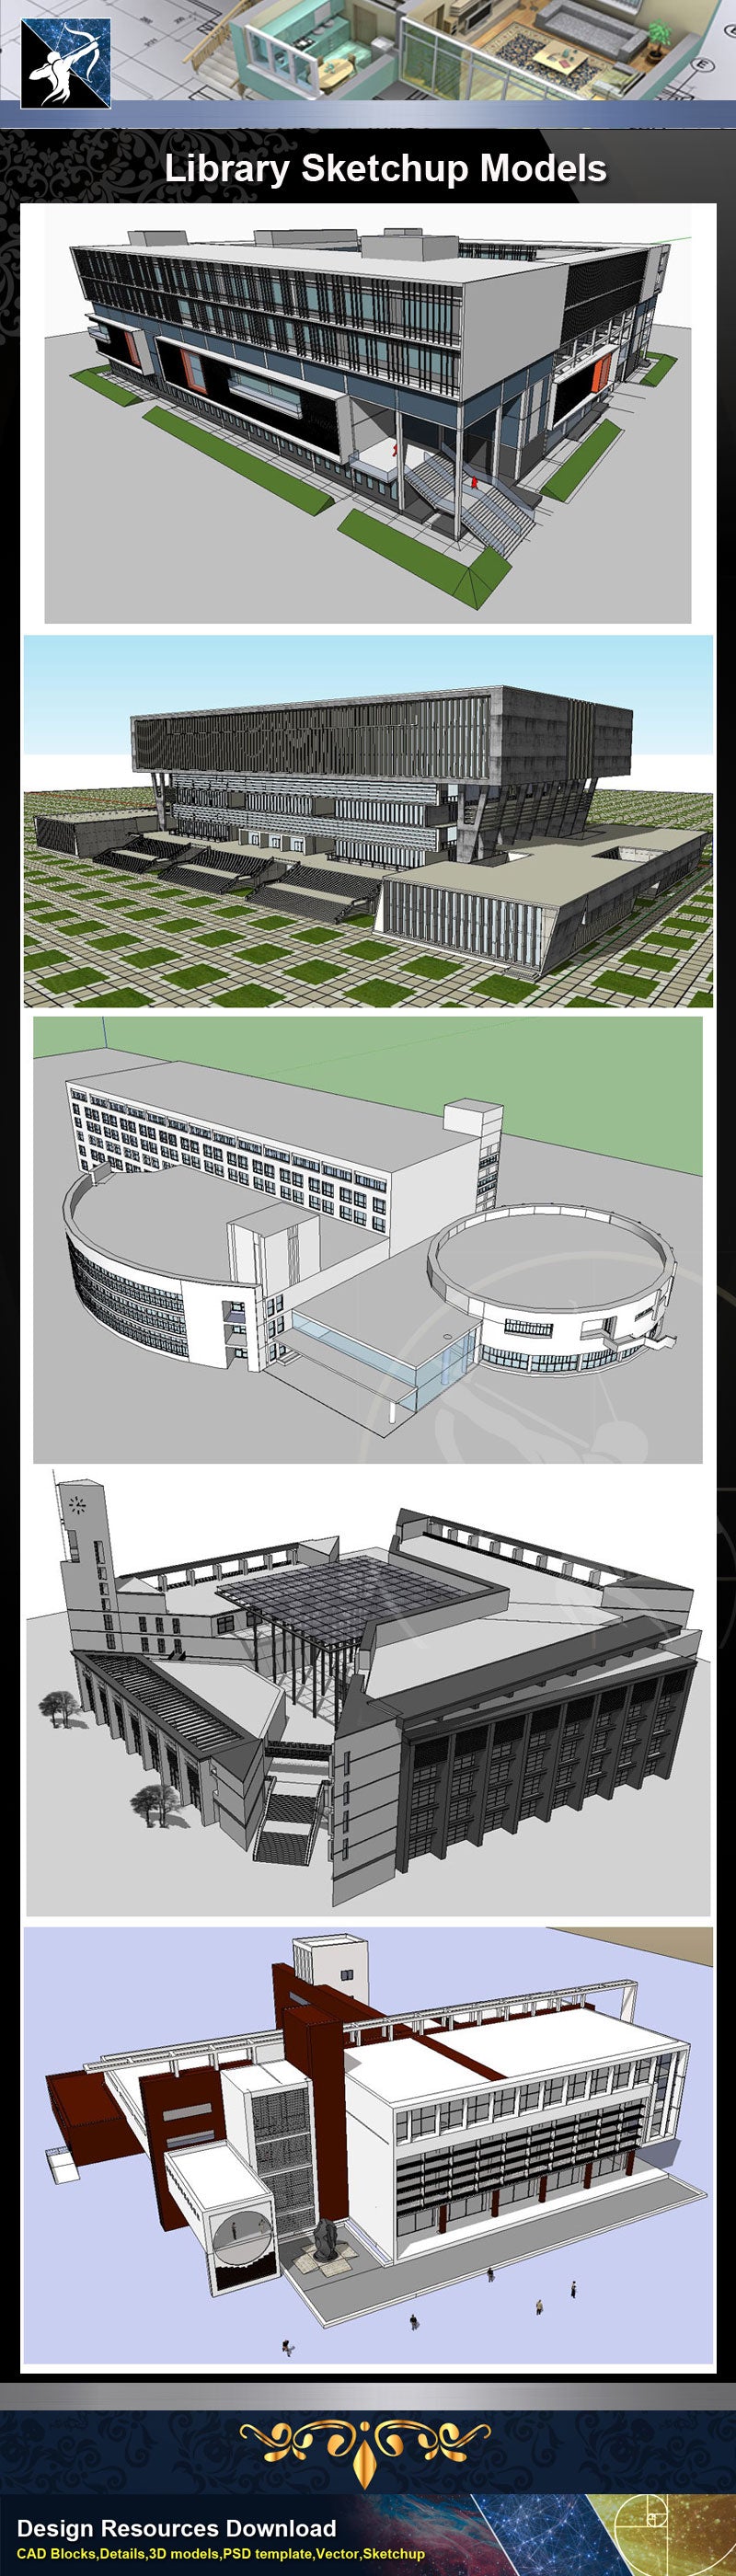 ★Sketchup 3D Models-15 Types of Library Sketchup Models